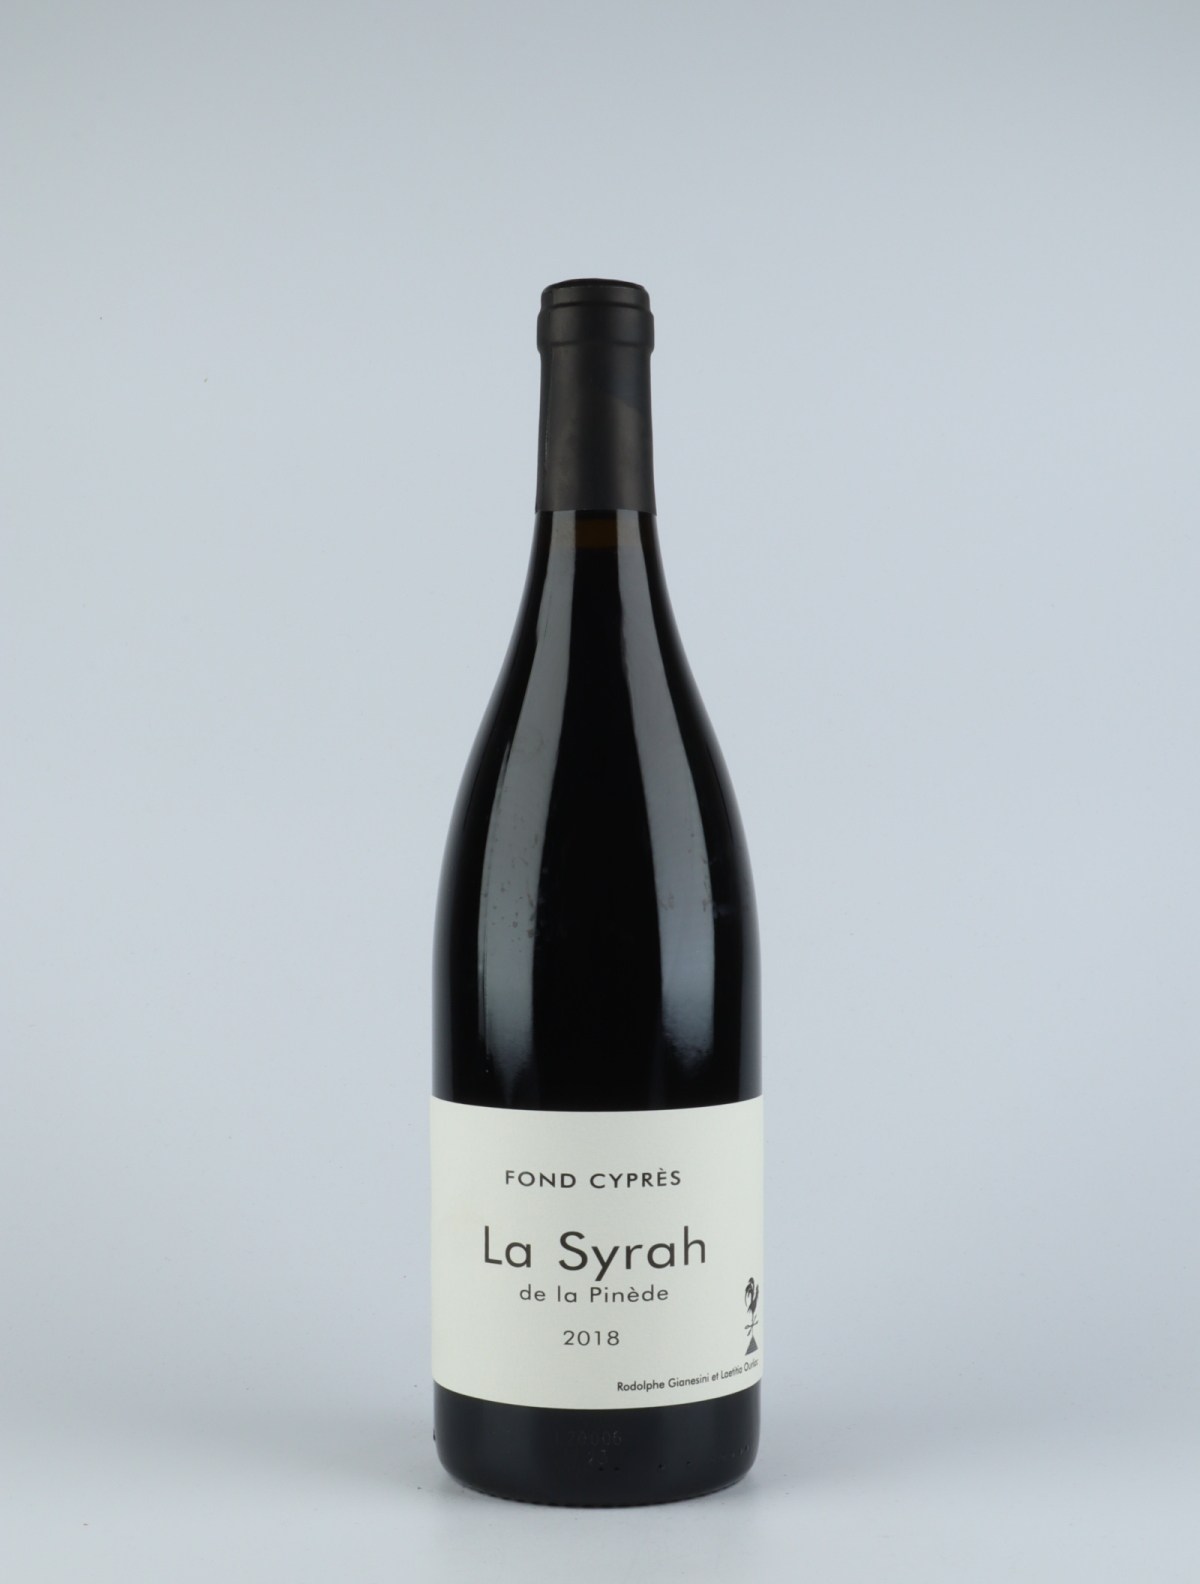 A bottle 2018 La Syrah de la Pinède Red wine from Fond Cyprès, Languedoc in France